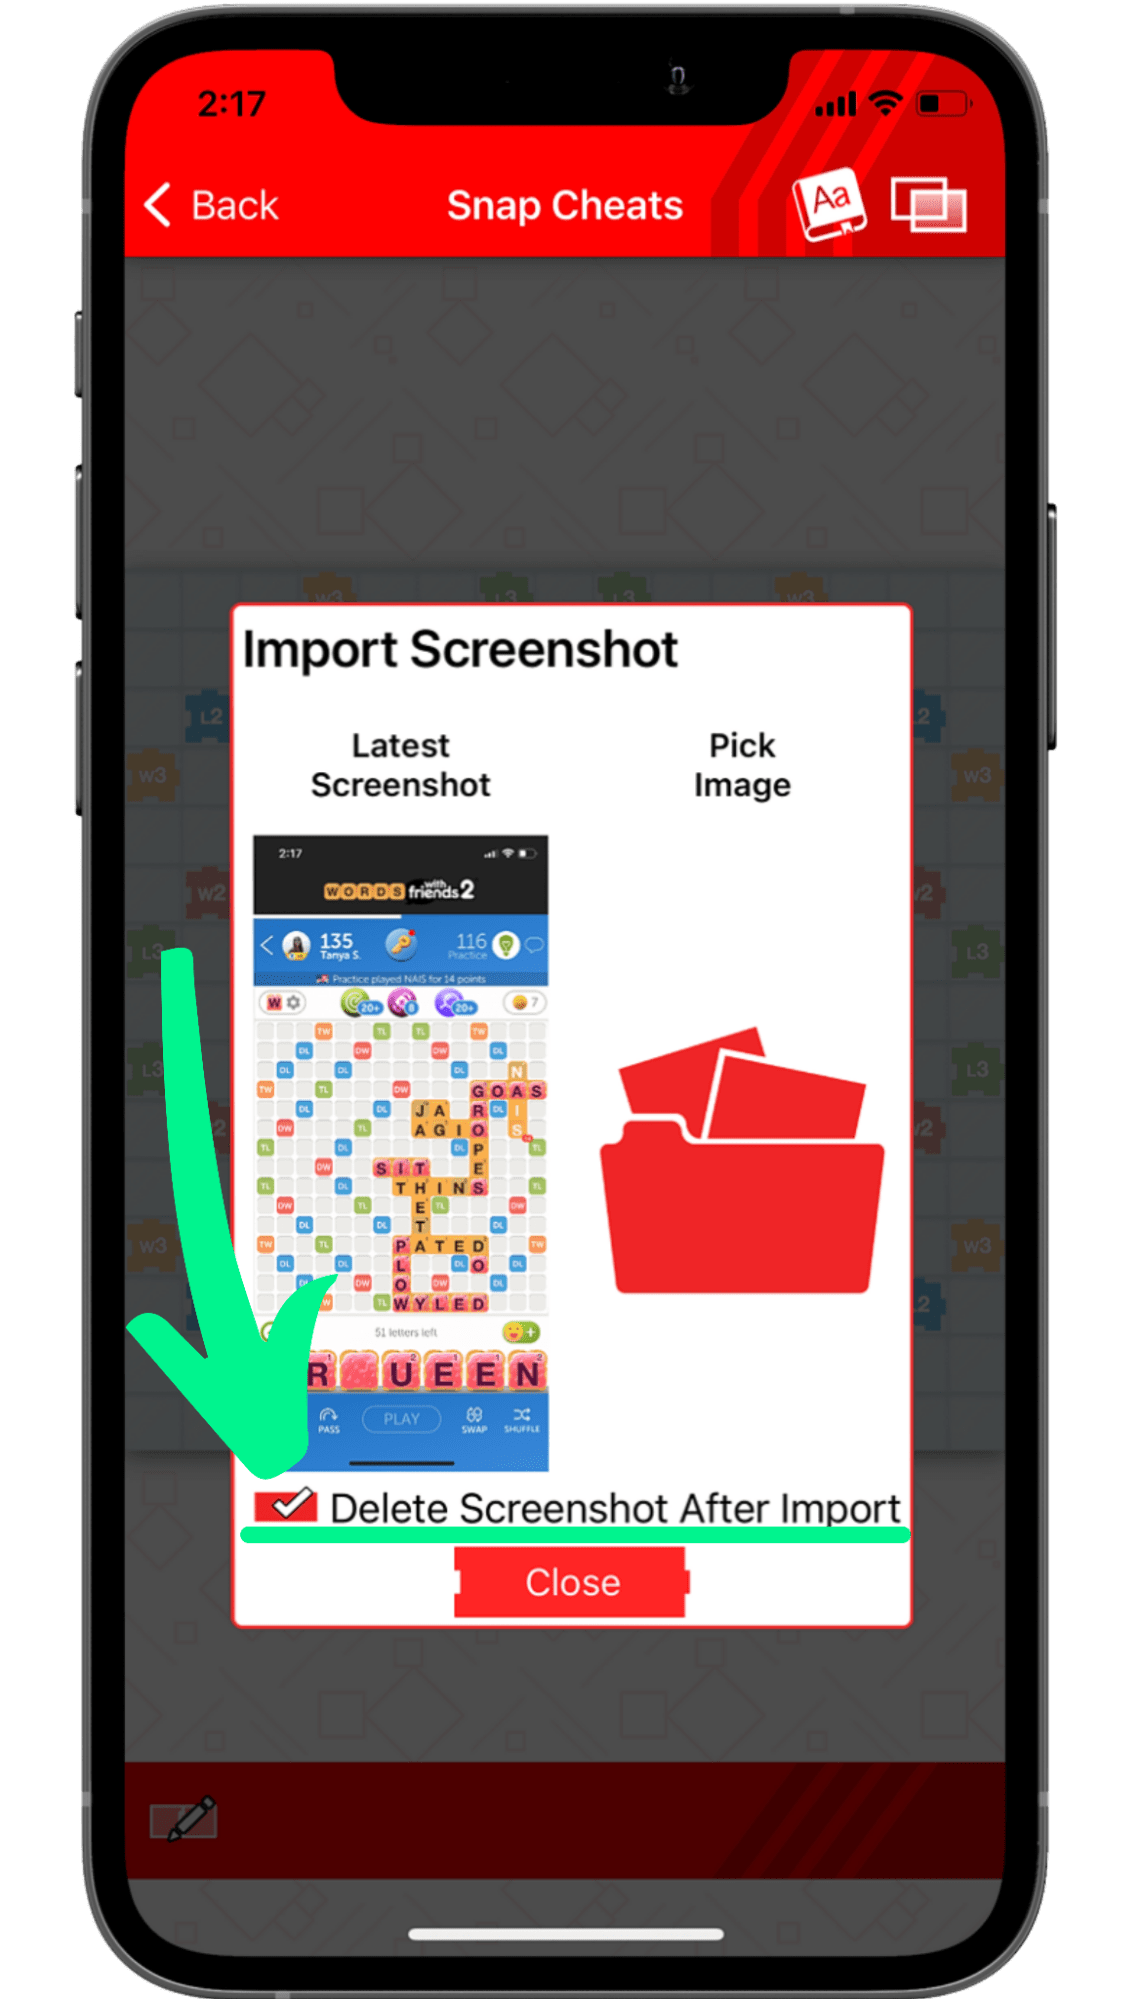 Make sure Delete Screenshot After Import is turned on 